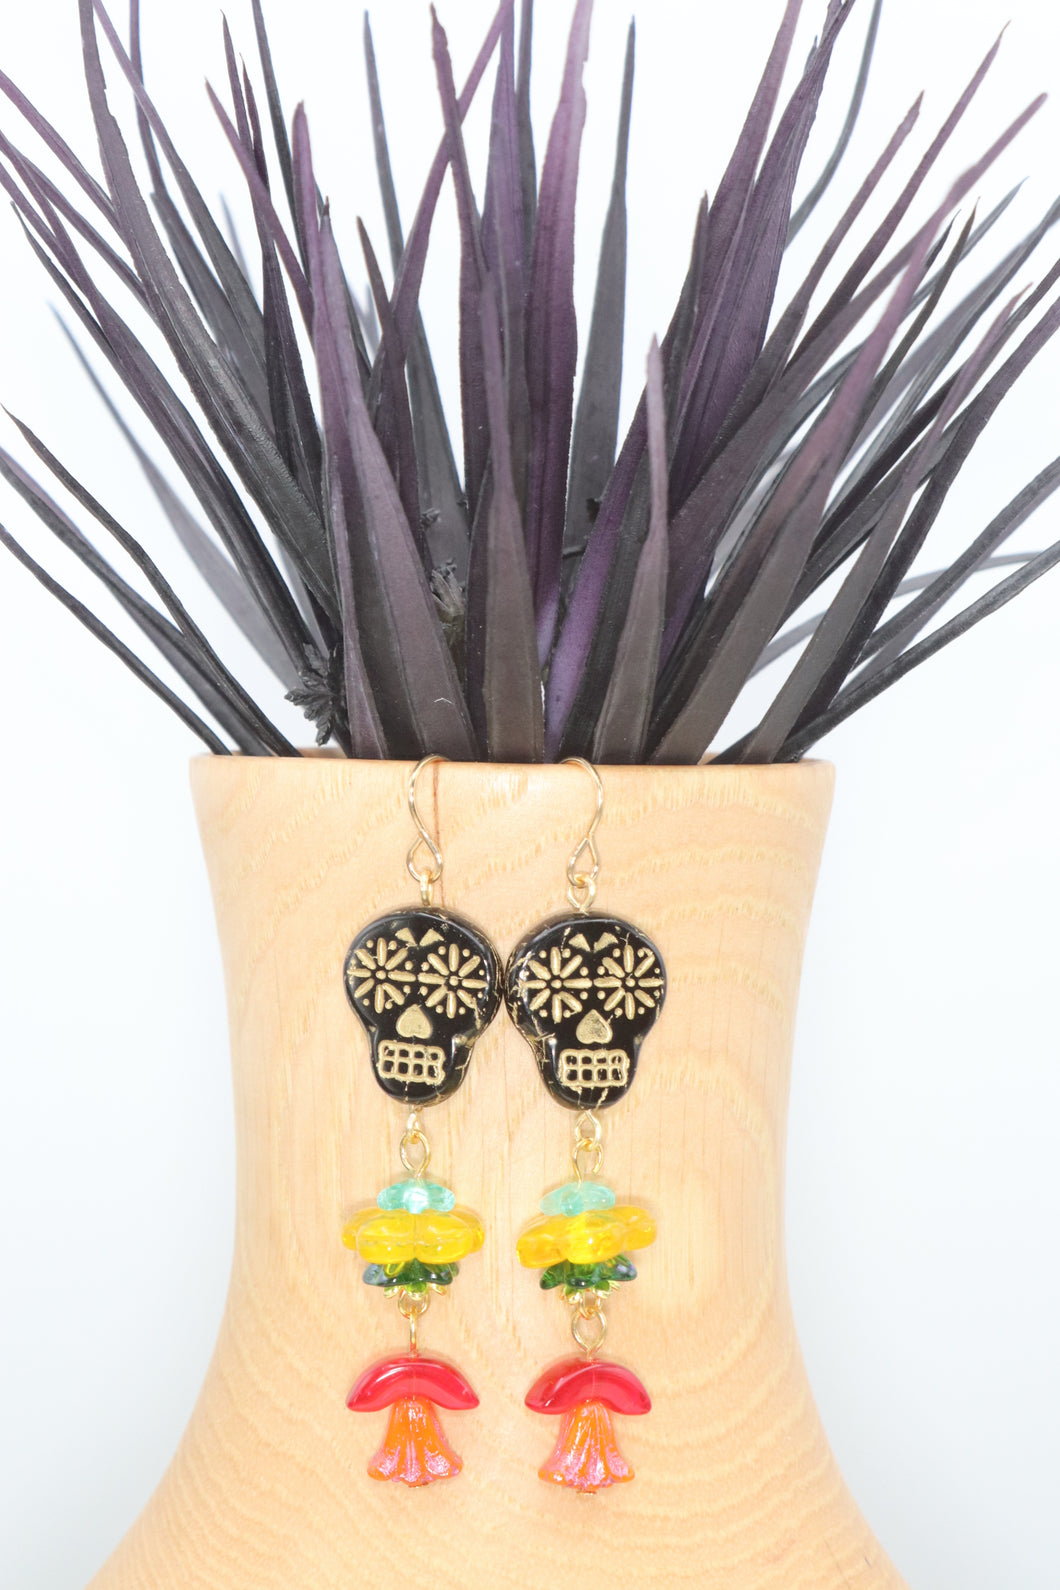 Sugar Skull Earrings for Dia de Los Muertos